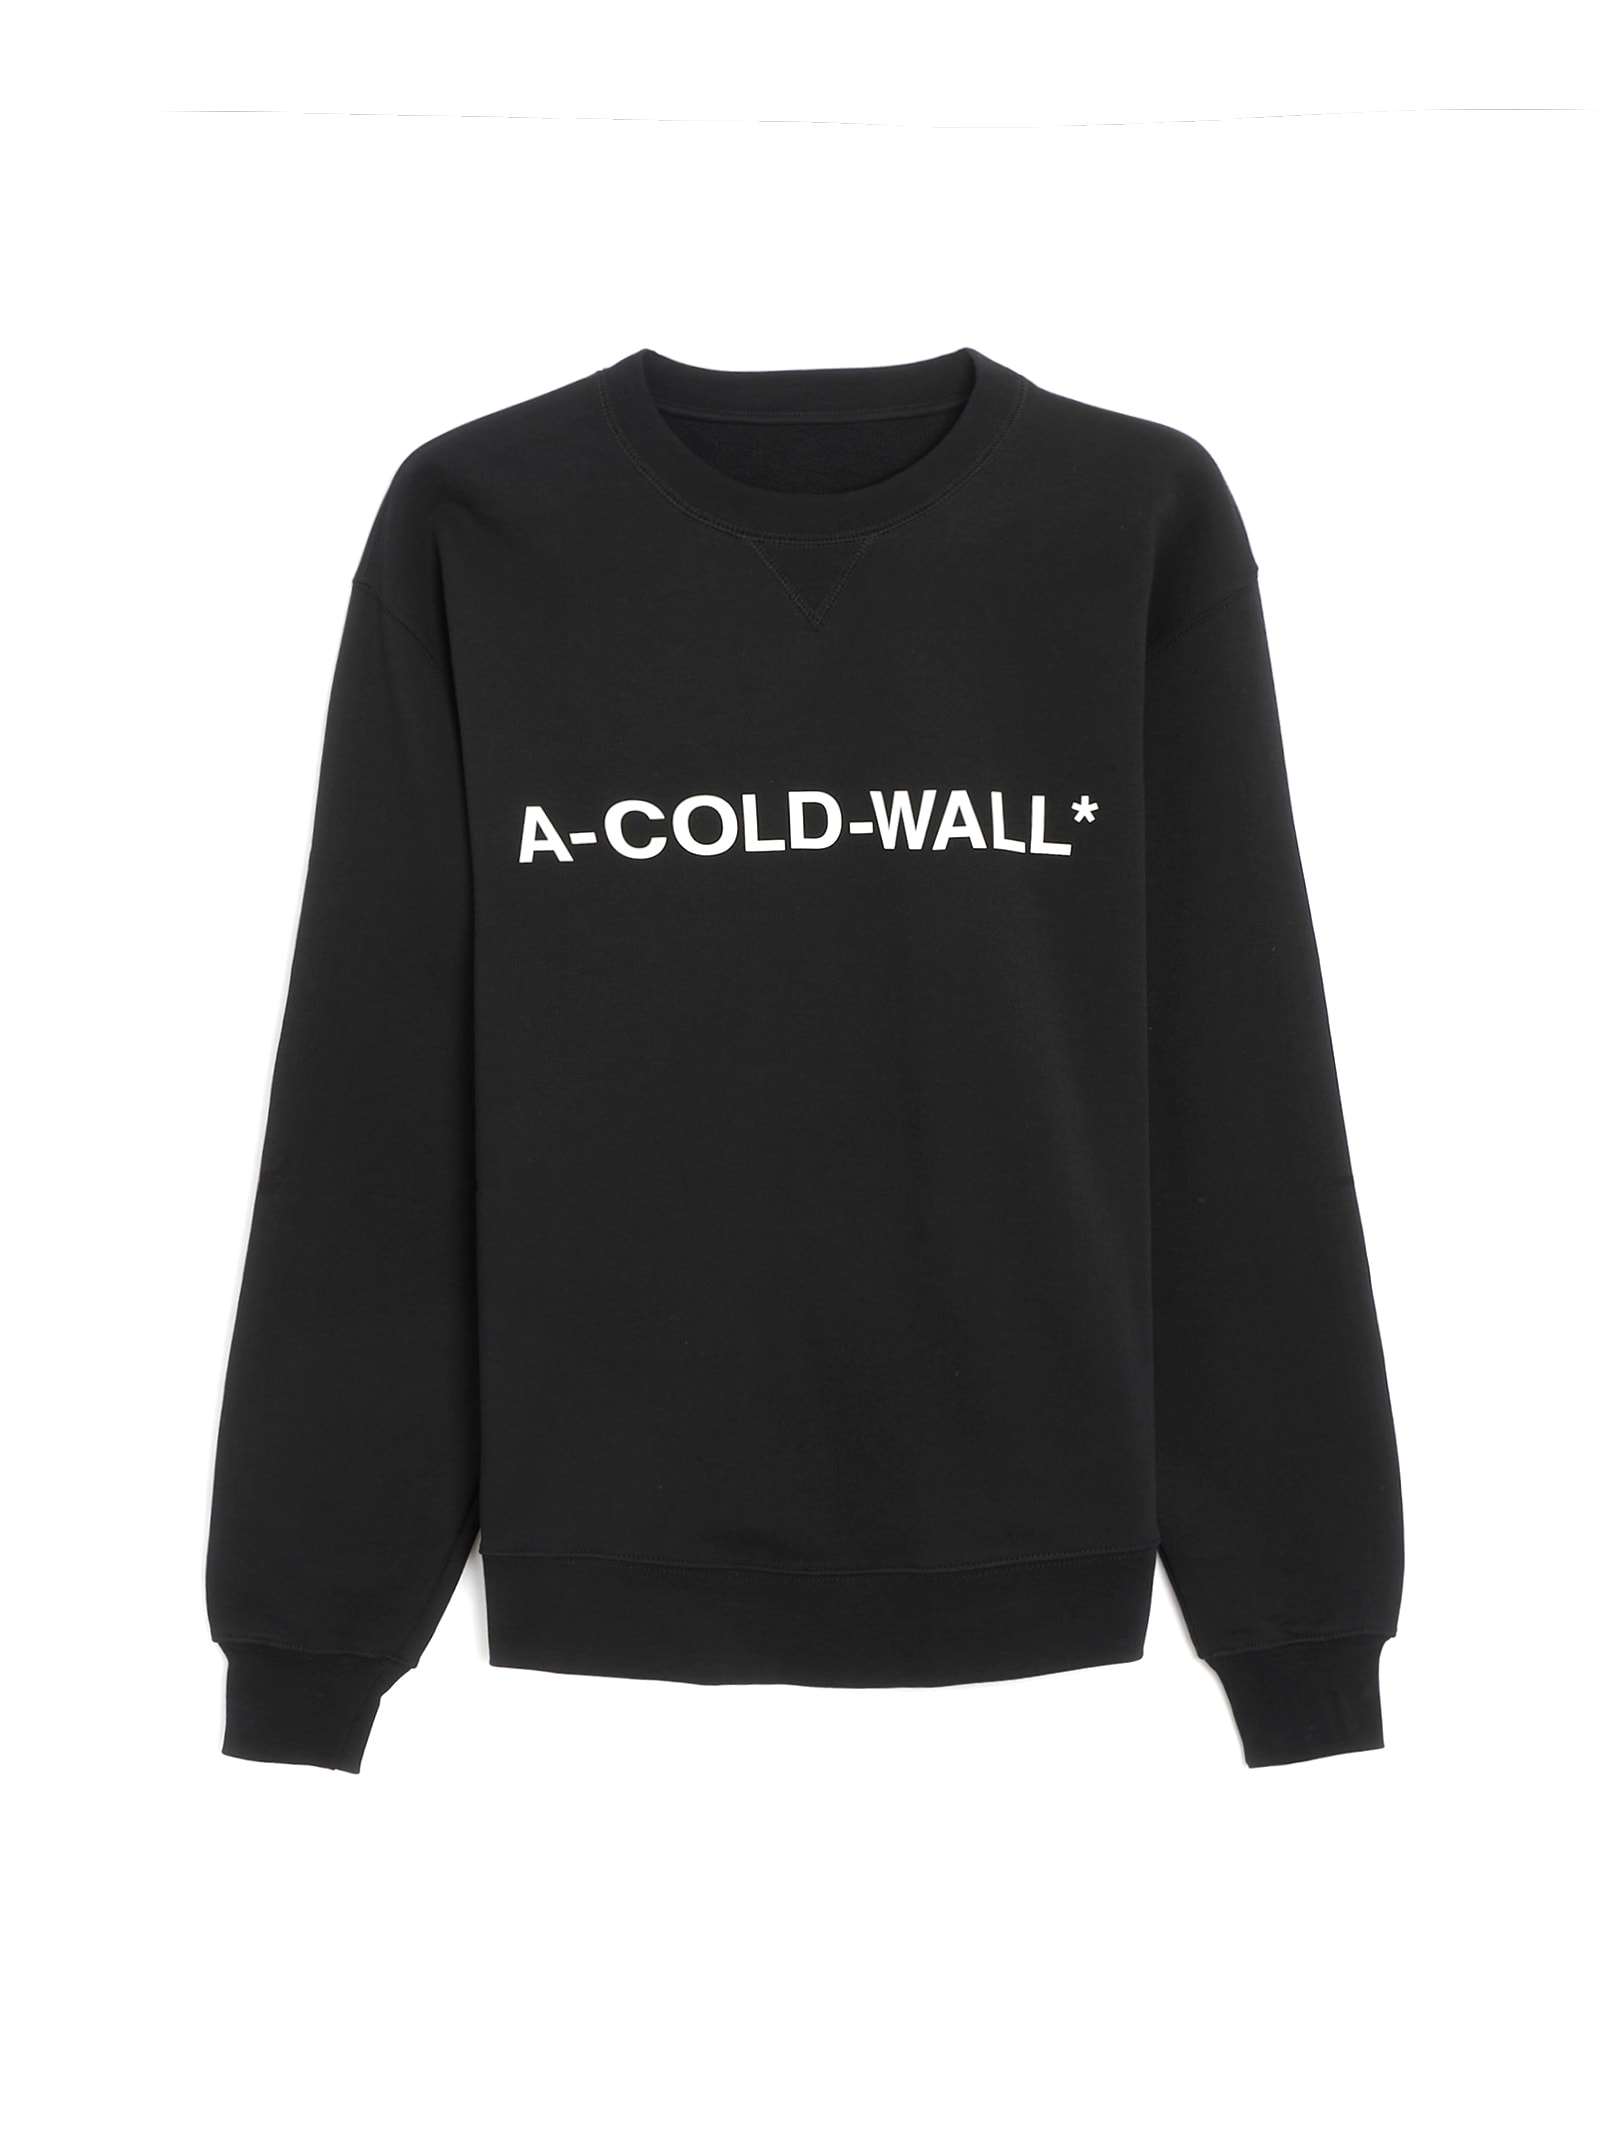 A-COLD-WALL Essential Logo Crewneck